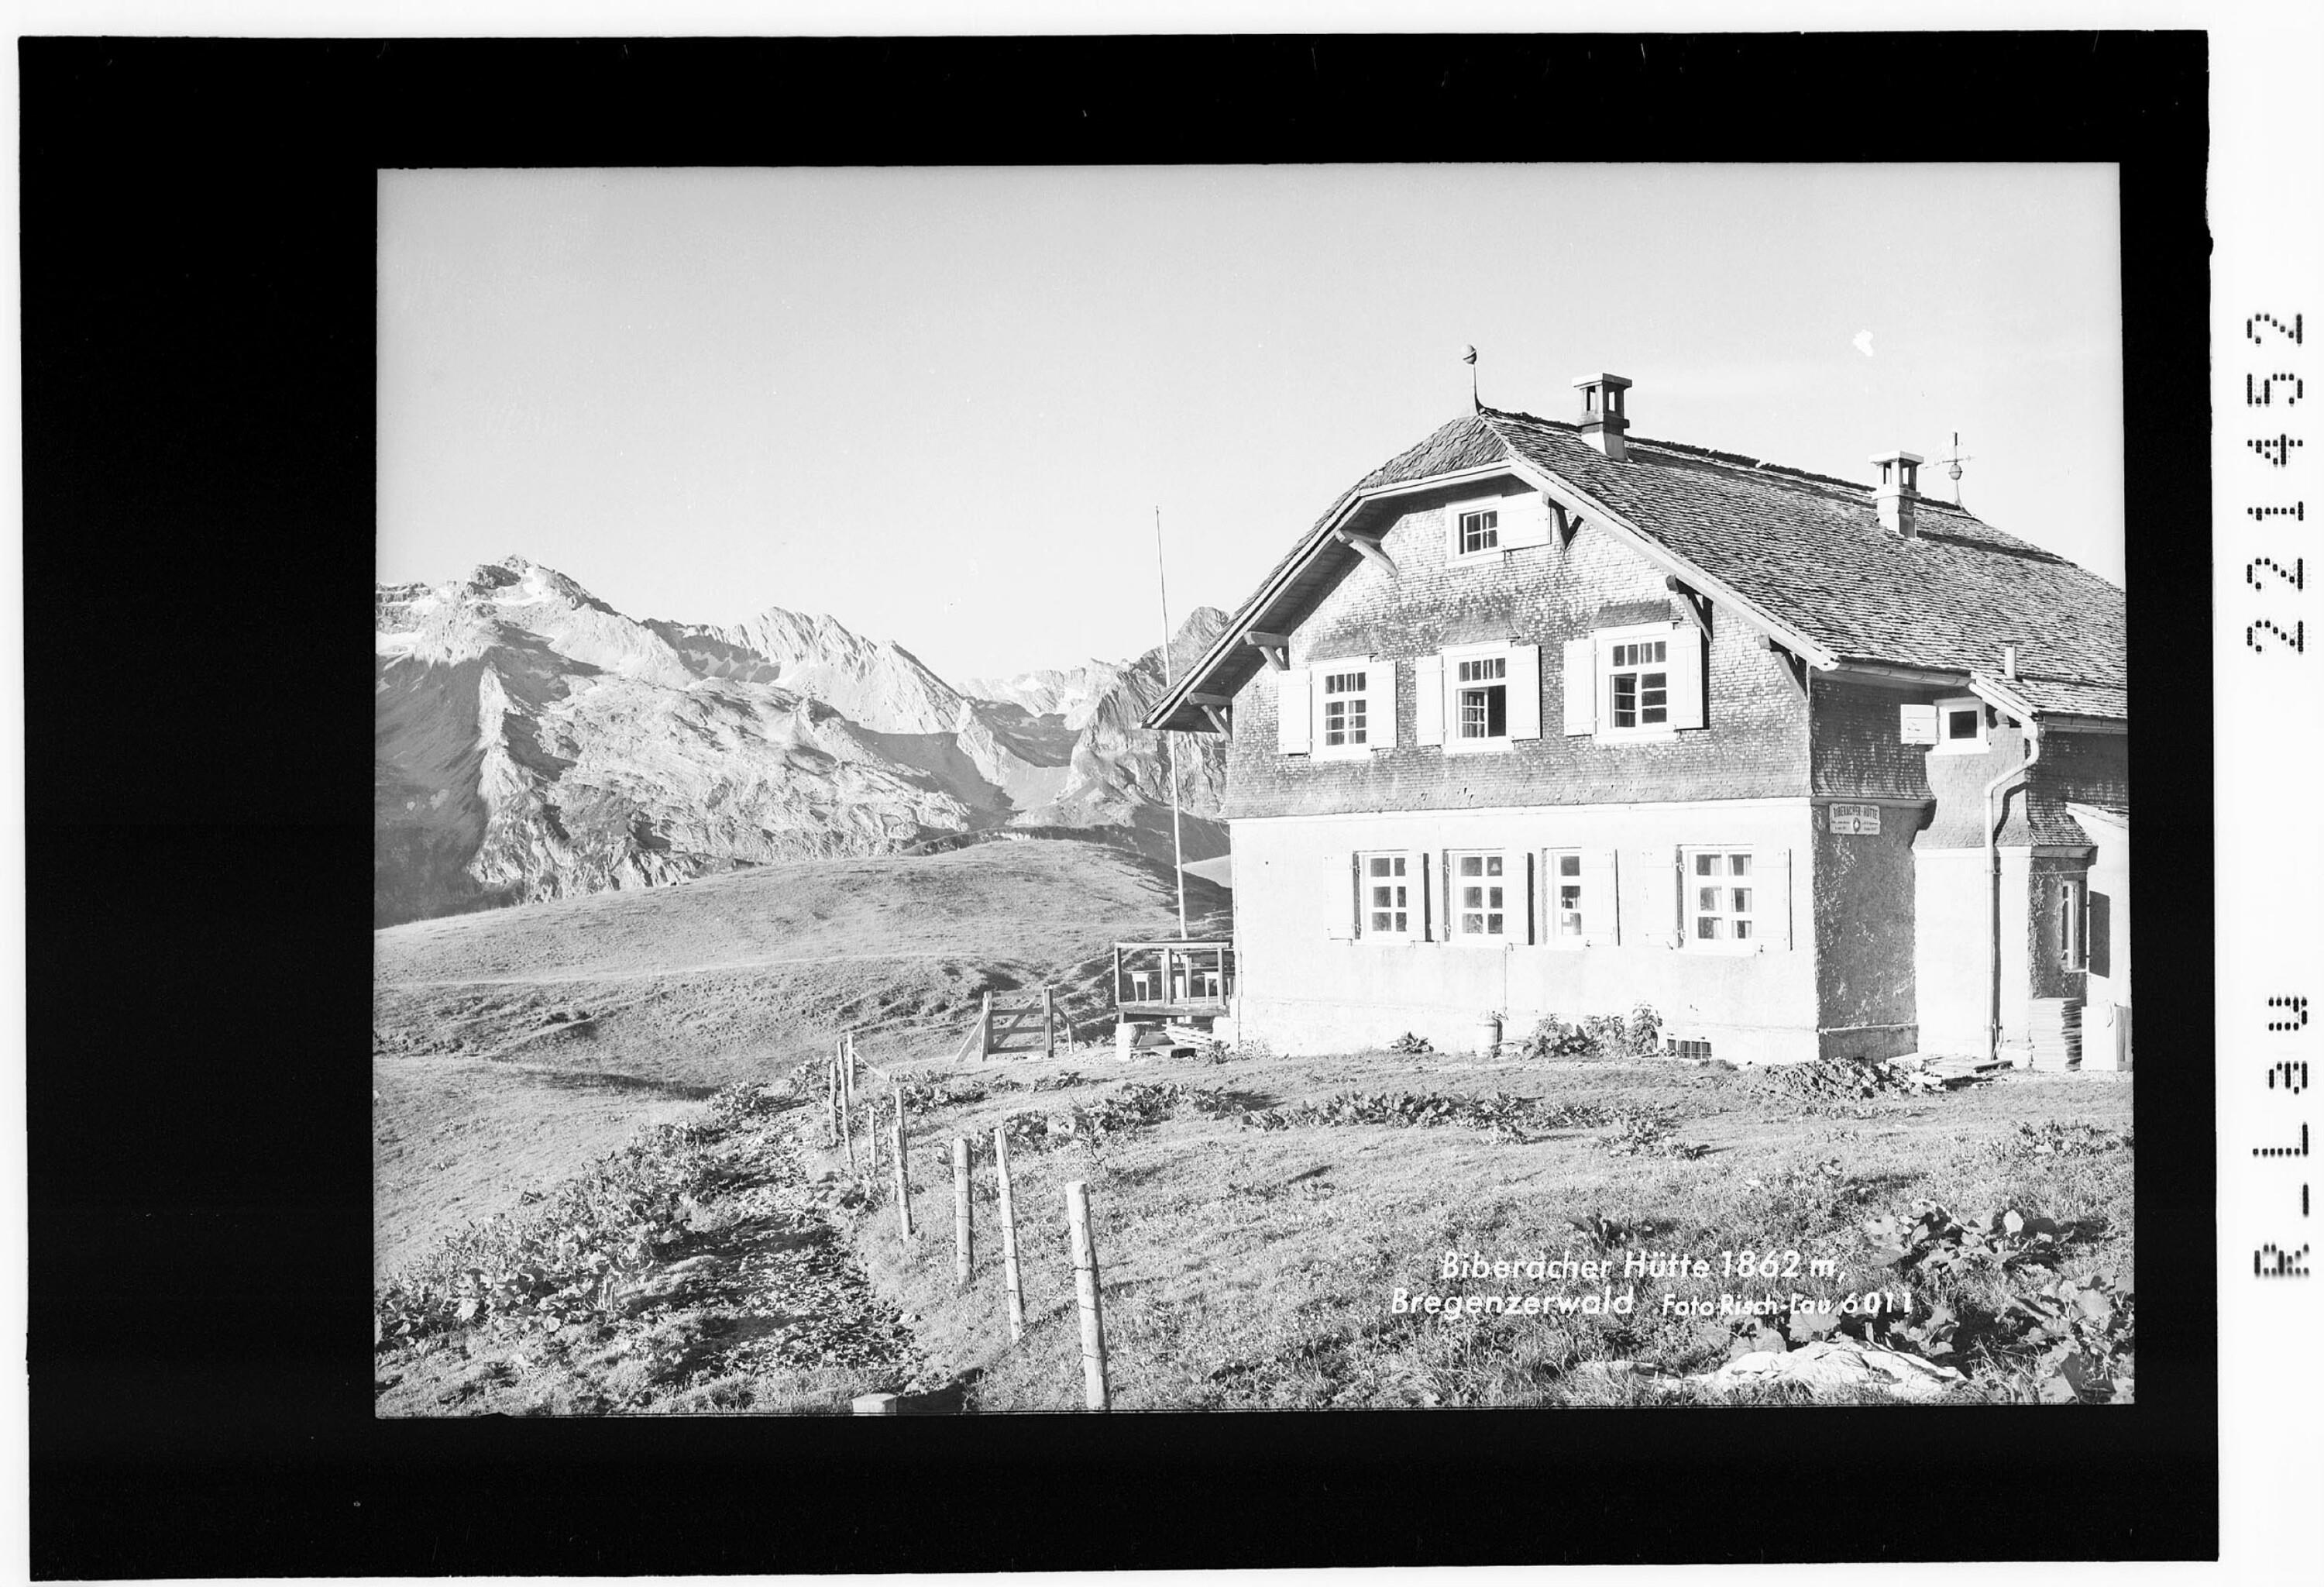 Biberacher Hütte 1862 m / Bregenzerwald></div>


    <hr>
    <div class=